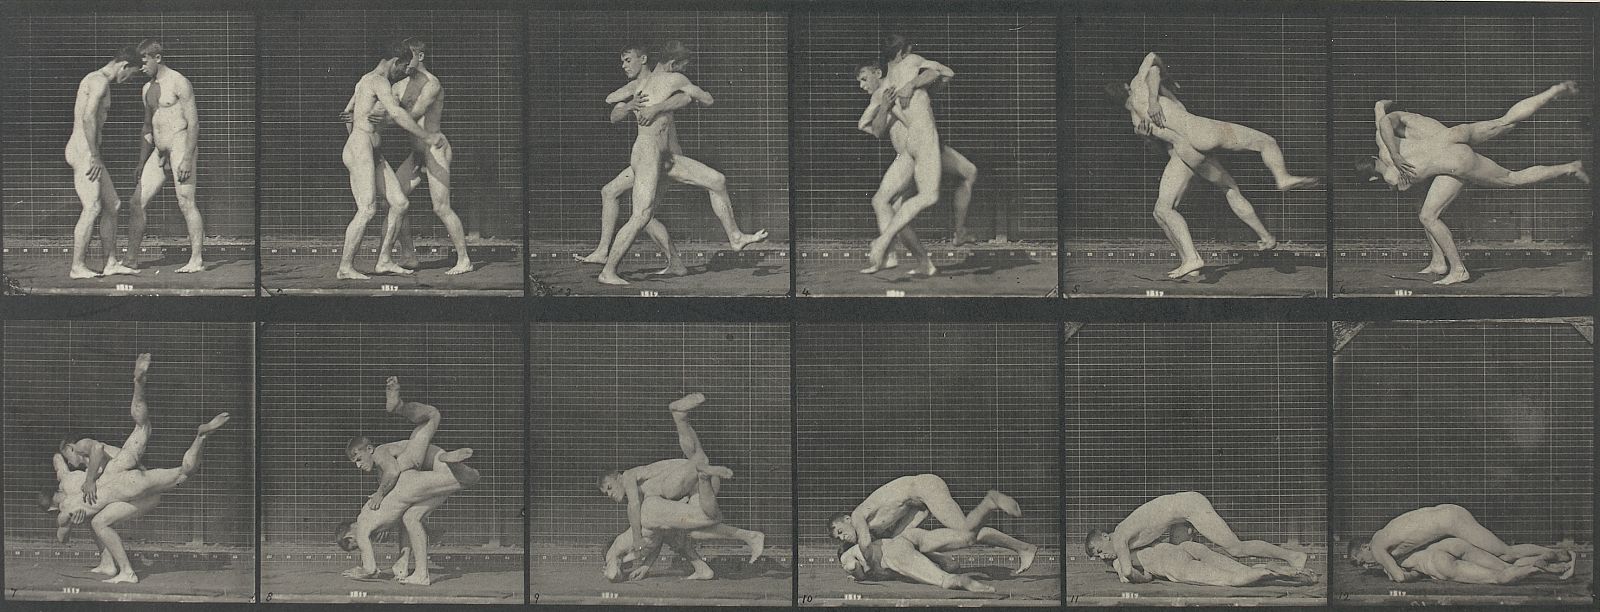 Eadweard Muybridge (1830-1904): Lucha de dos hombres desnudos, 1887. © Musée d'Orsay, dist. RMN / Alexis Brandt